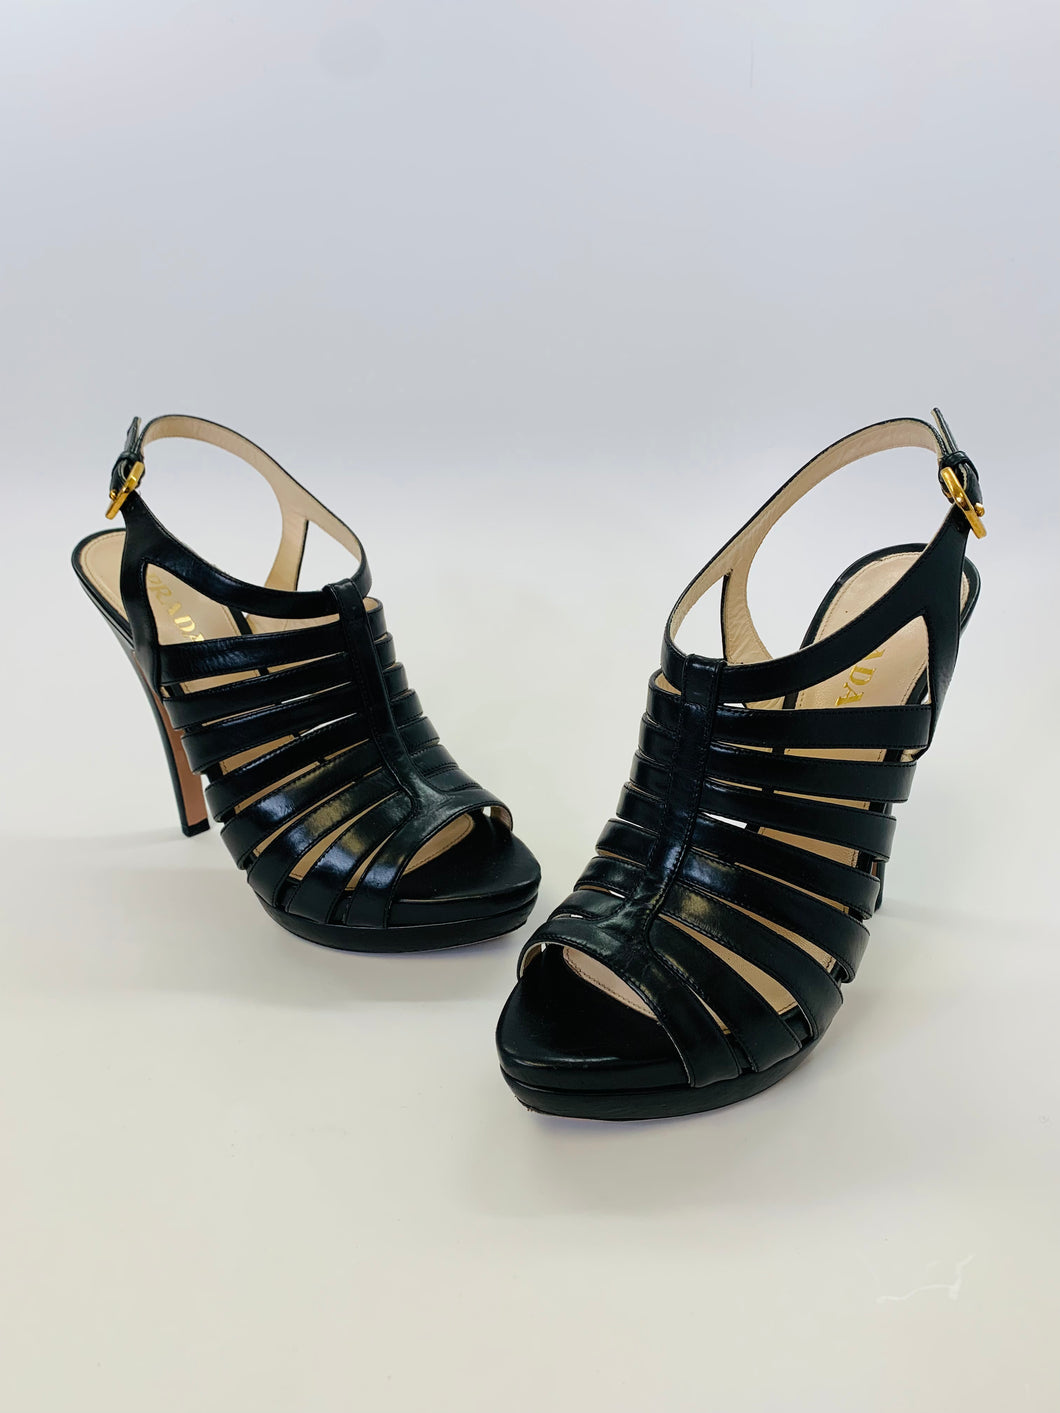 Prada Black Platform Sandals Size 39 1/2